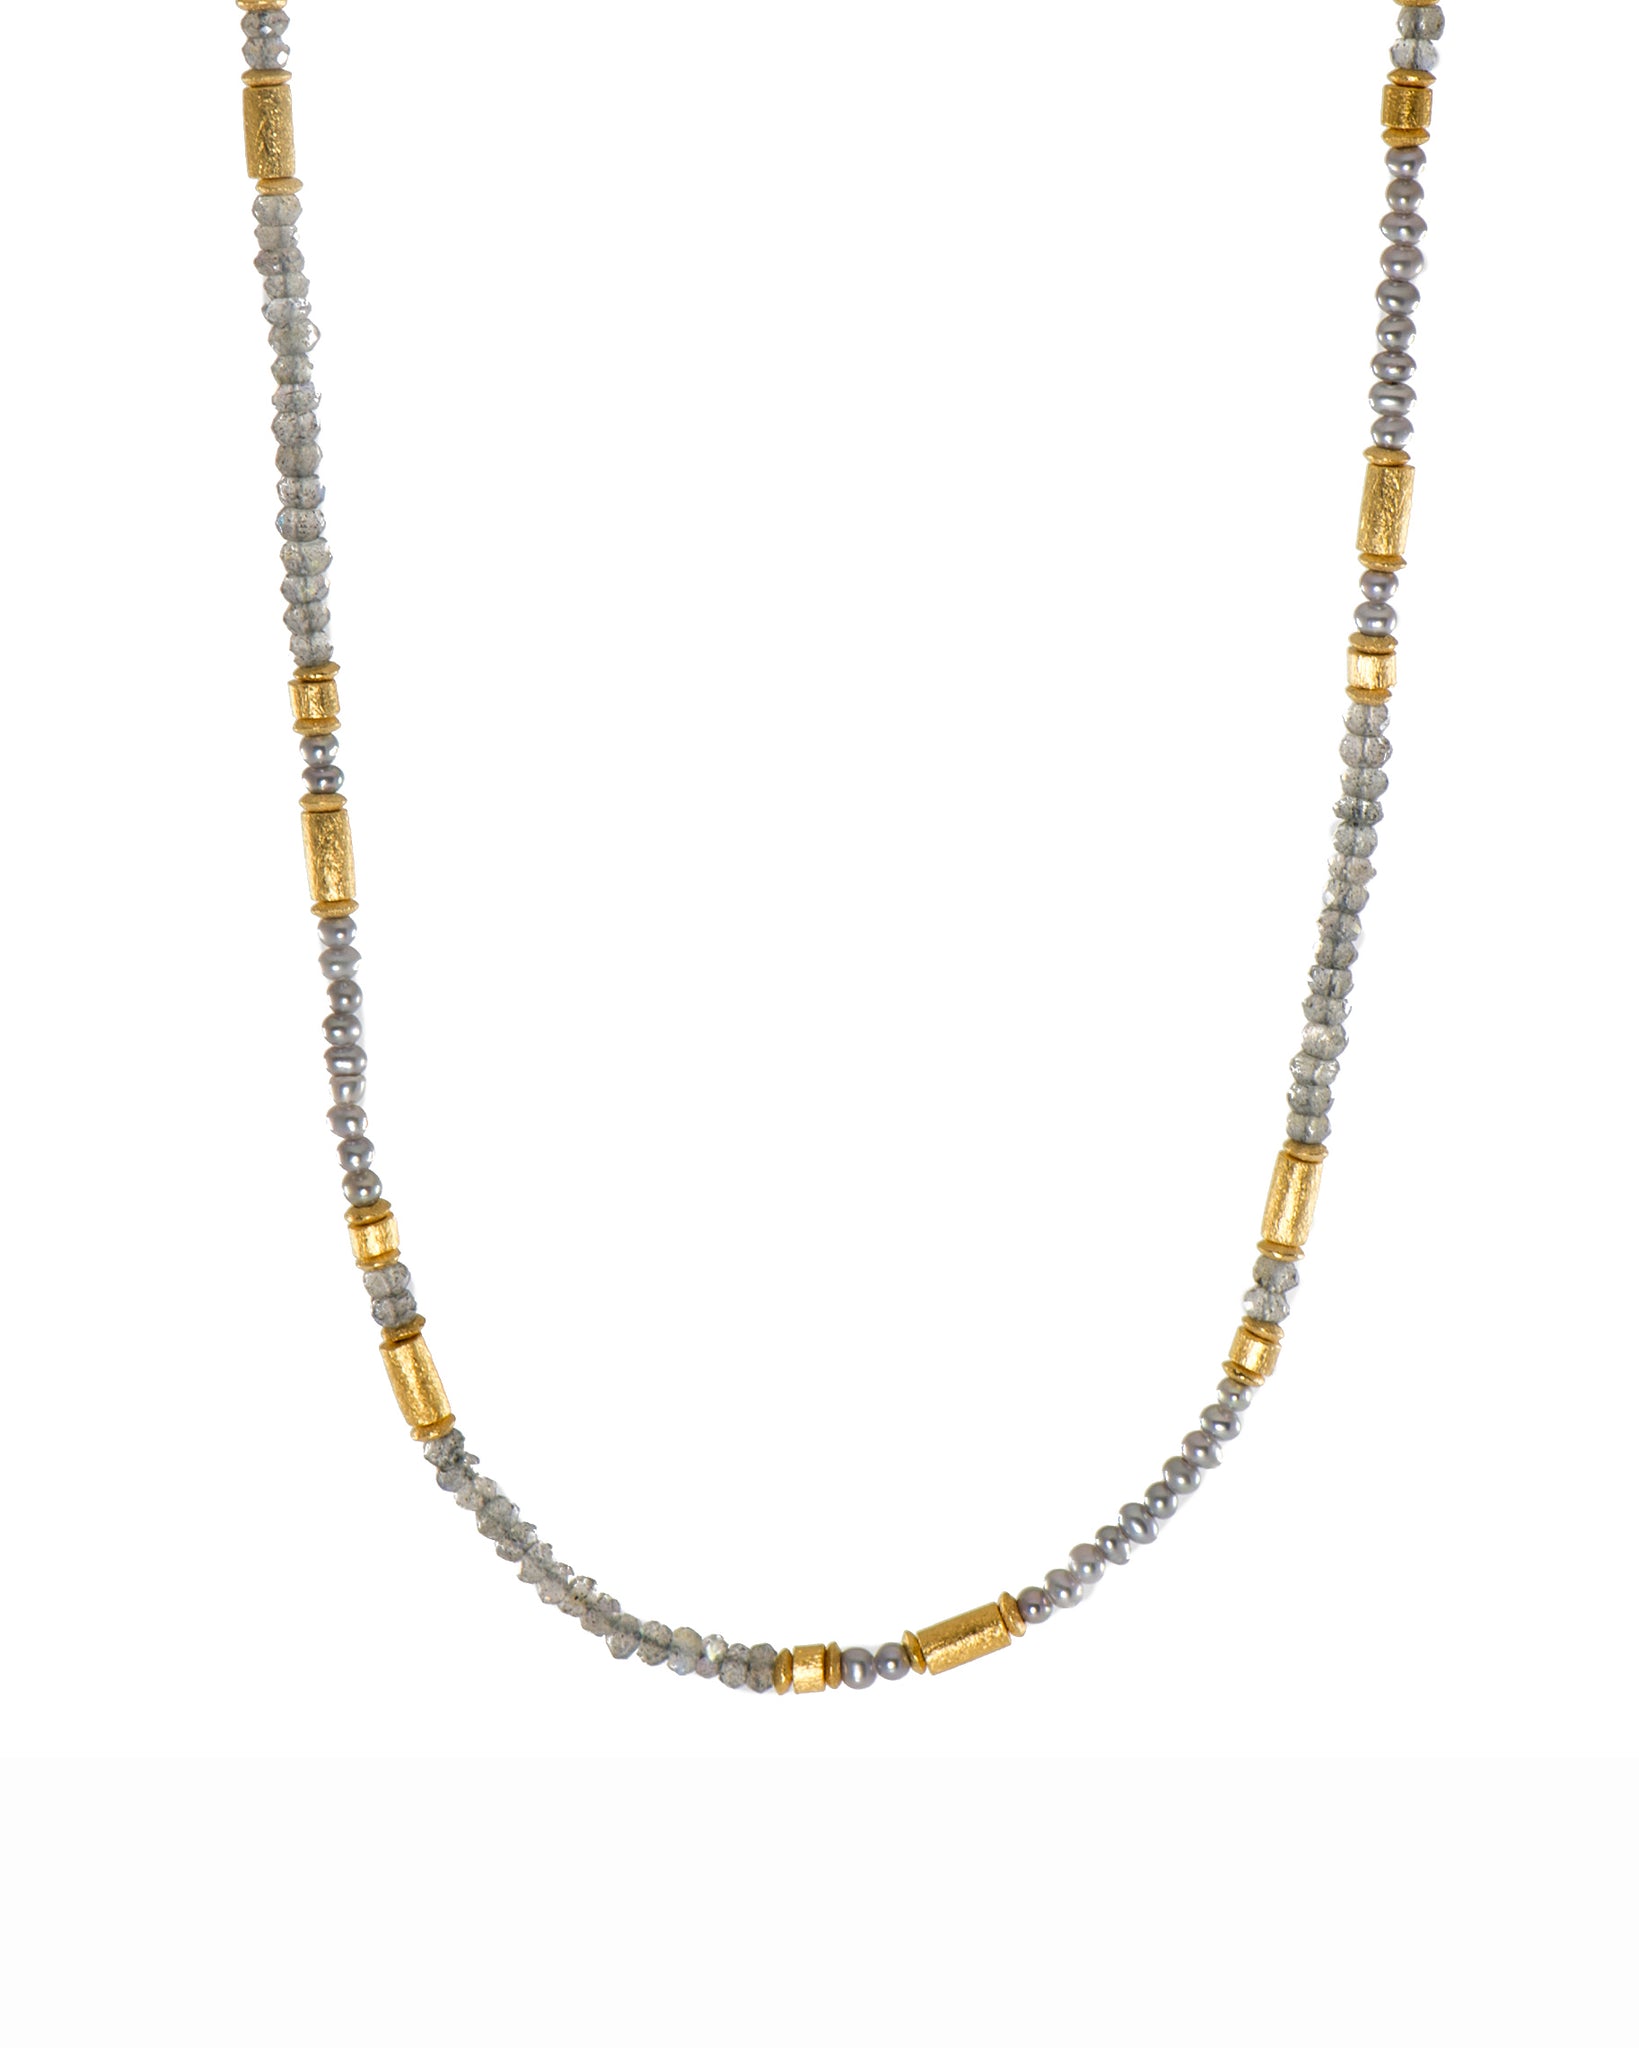 Labradorite and Grey Pearl Necklace 3MM 24K Fair Trade Gold Vermeil